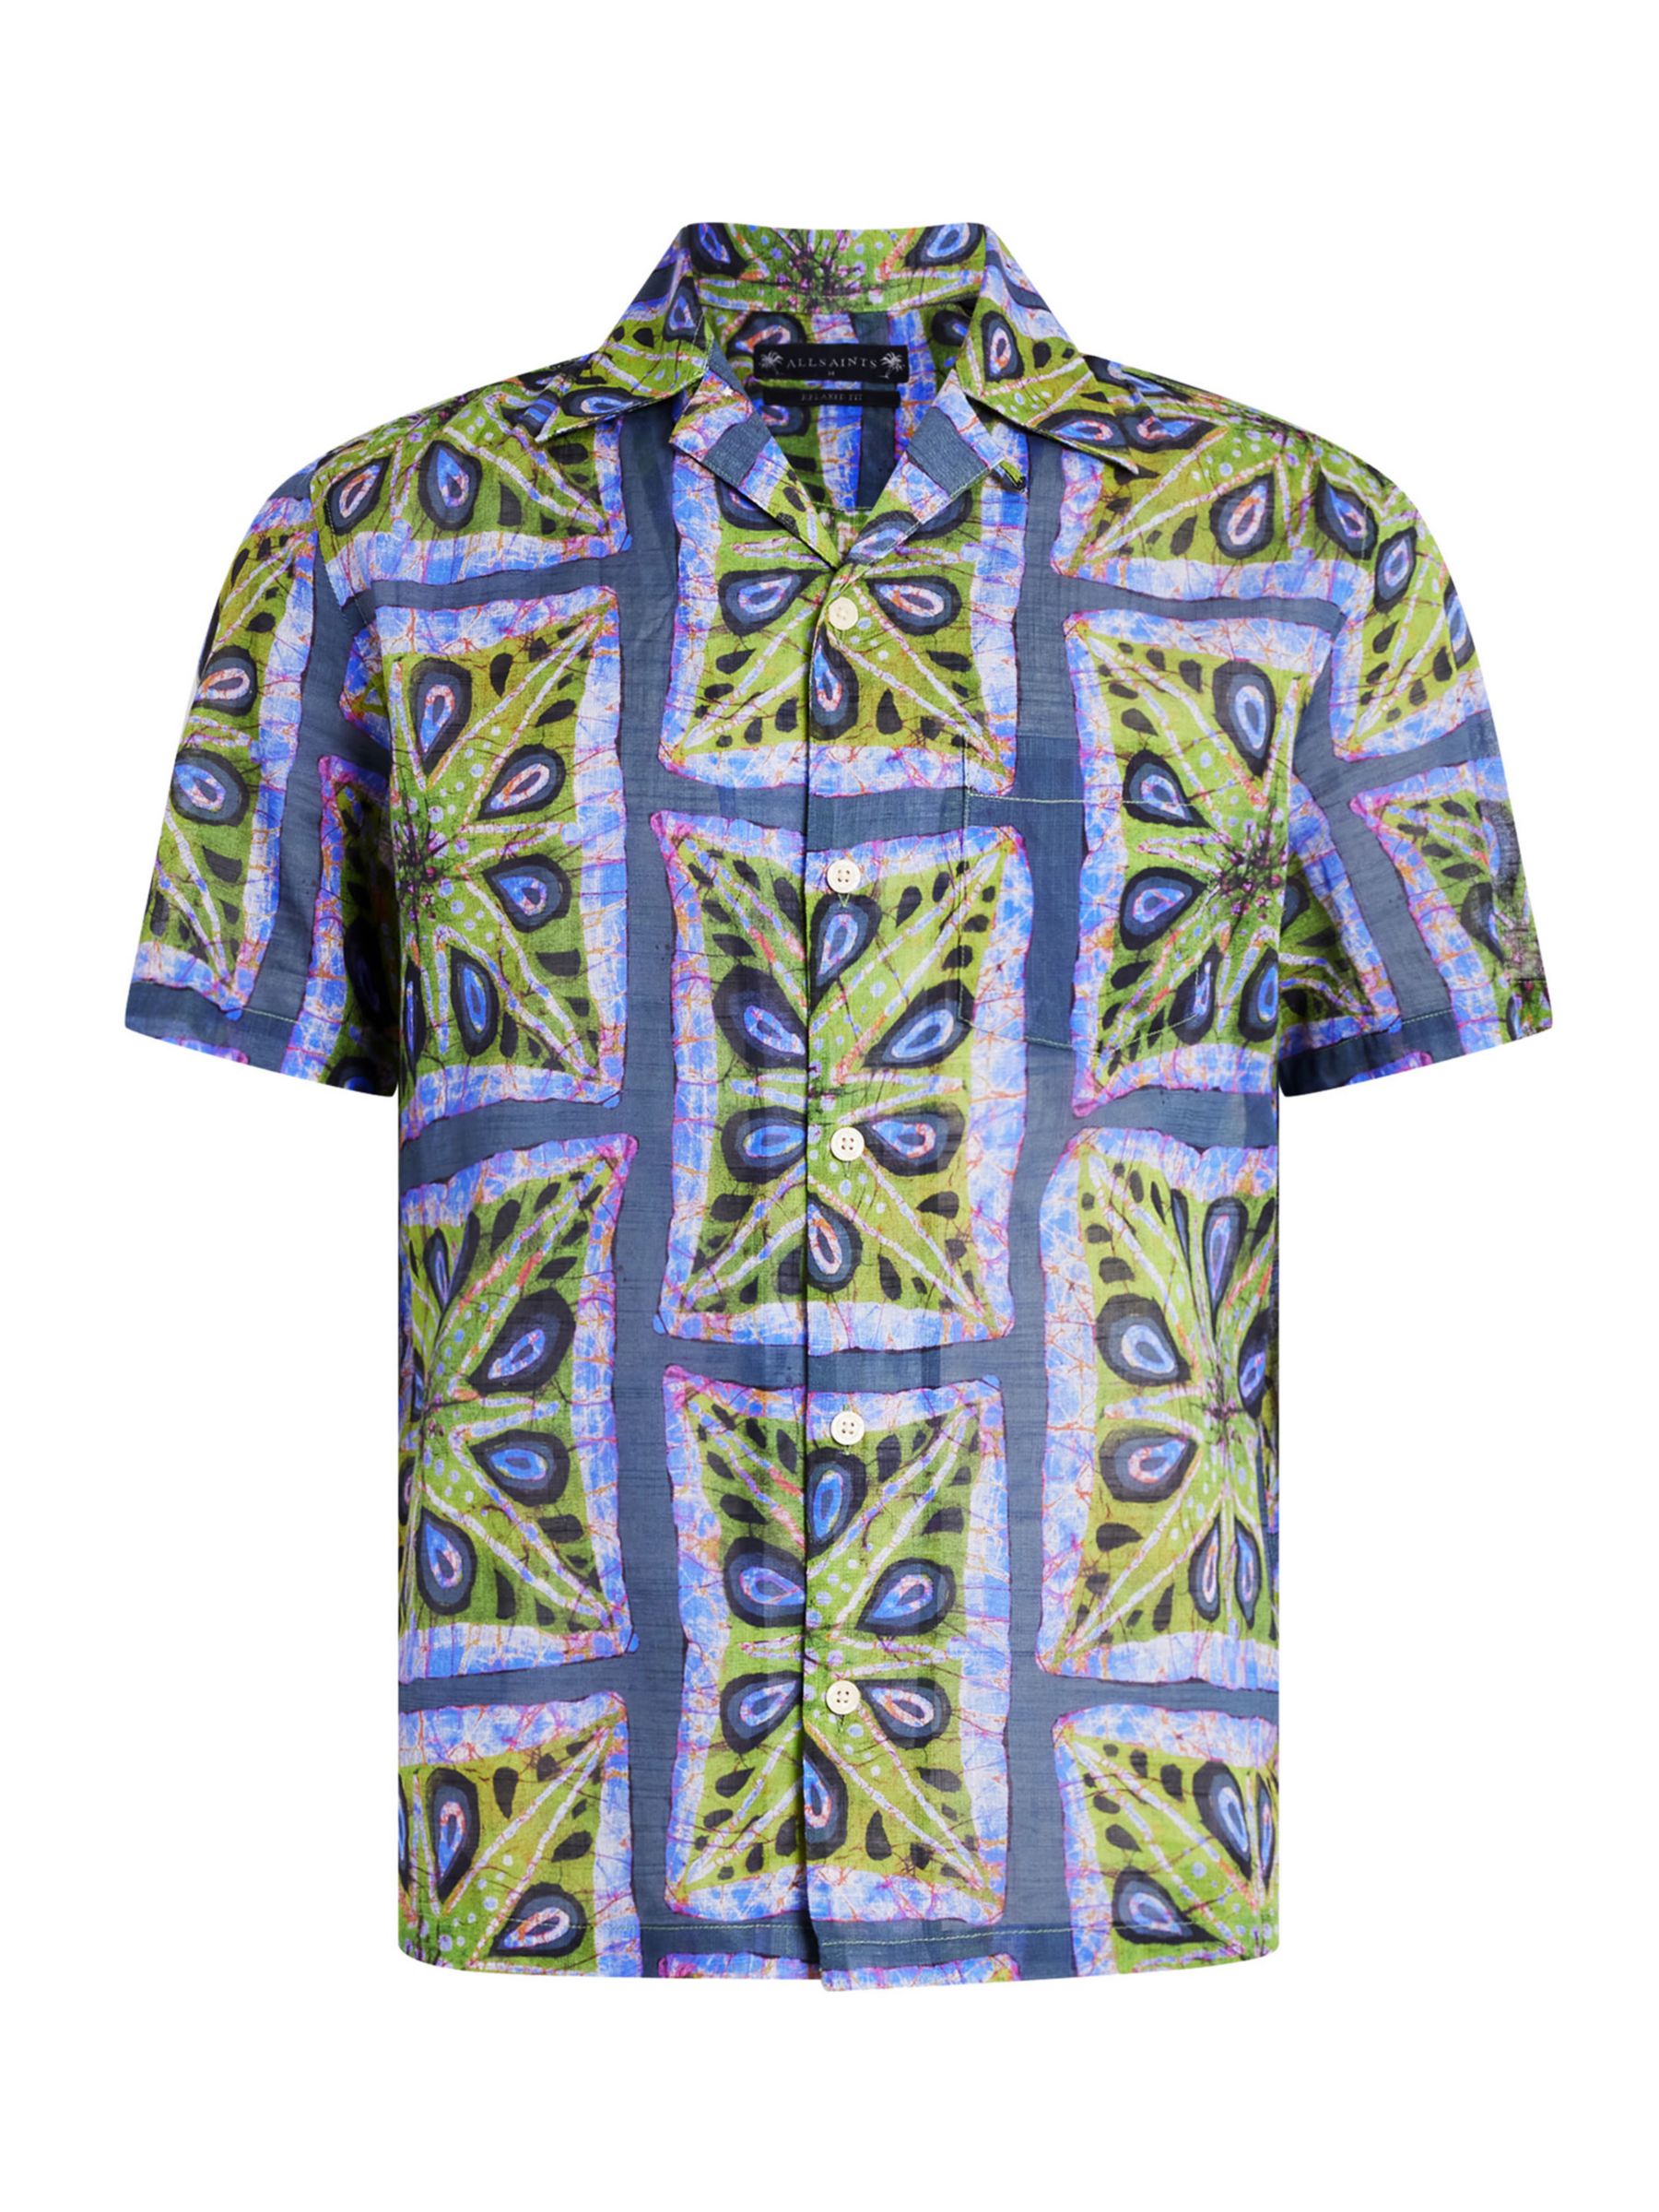 Buy AllSaints Diaz Short Sleeve Shirt, Green/Multi Online at johnlewis.com